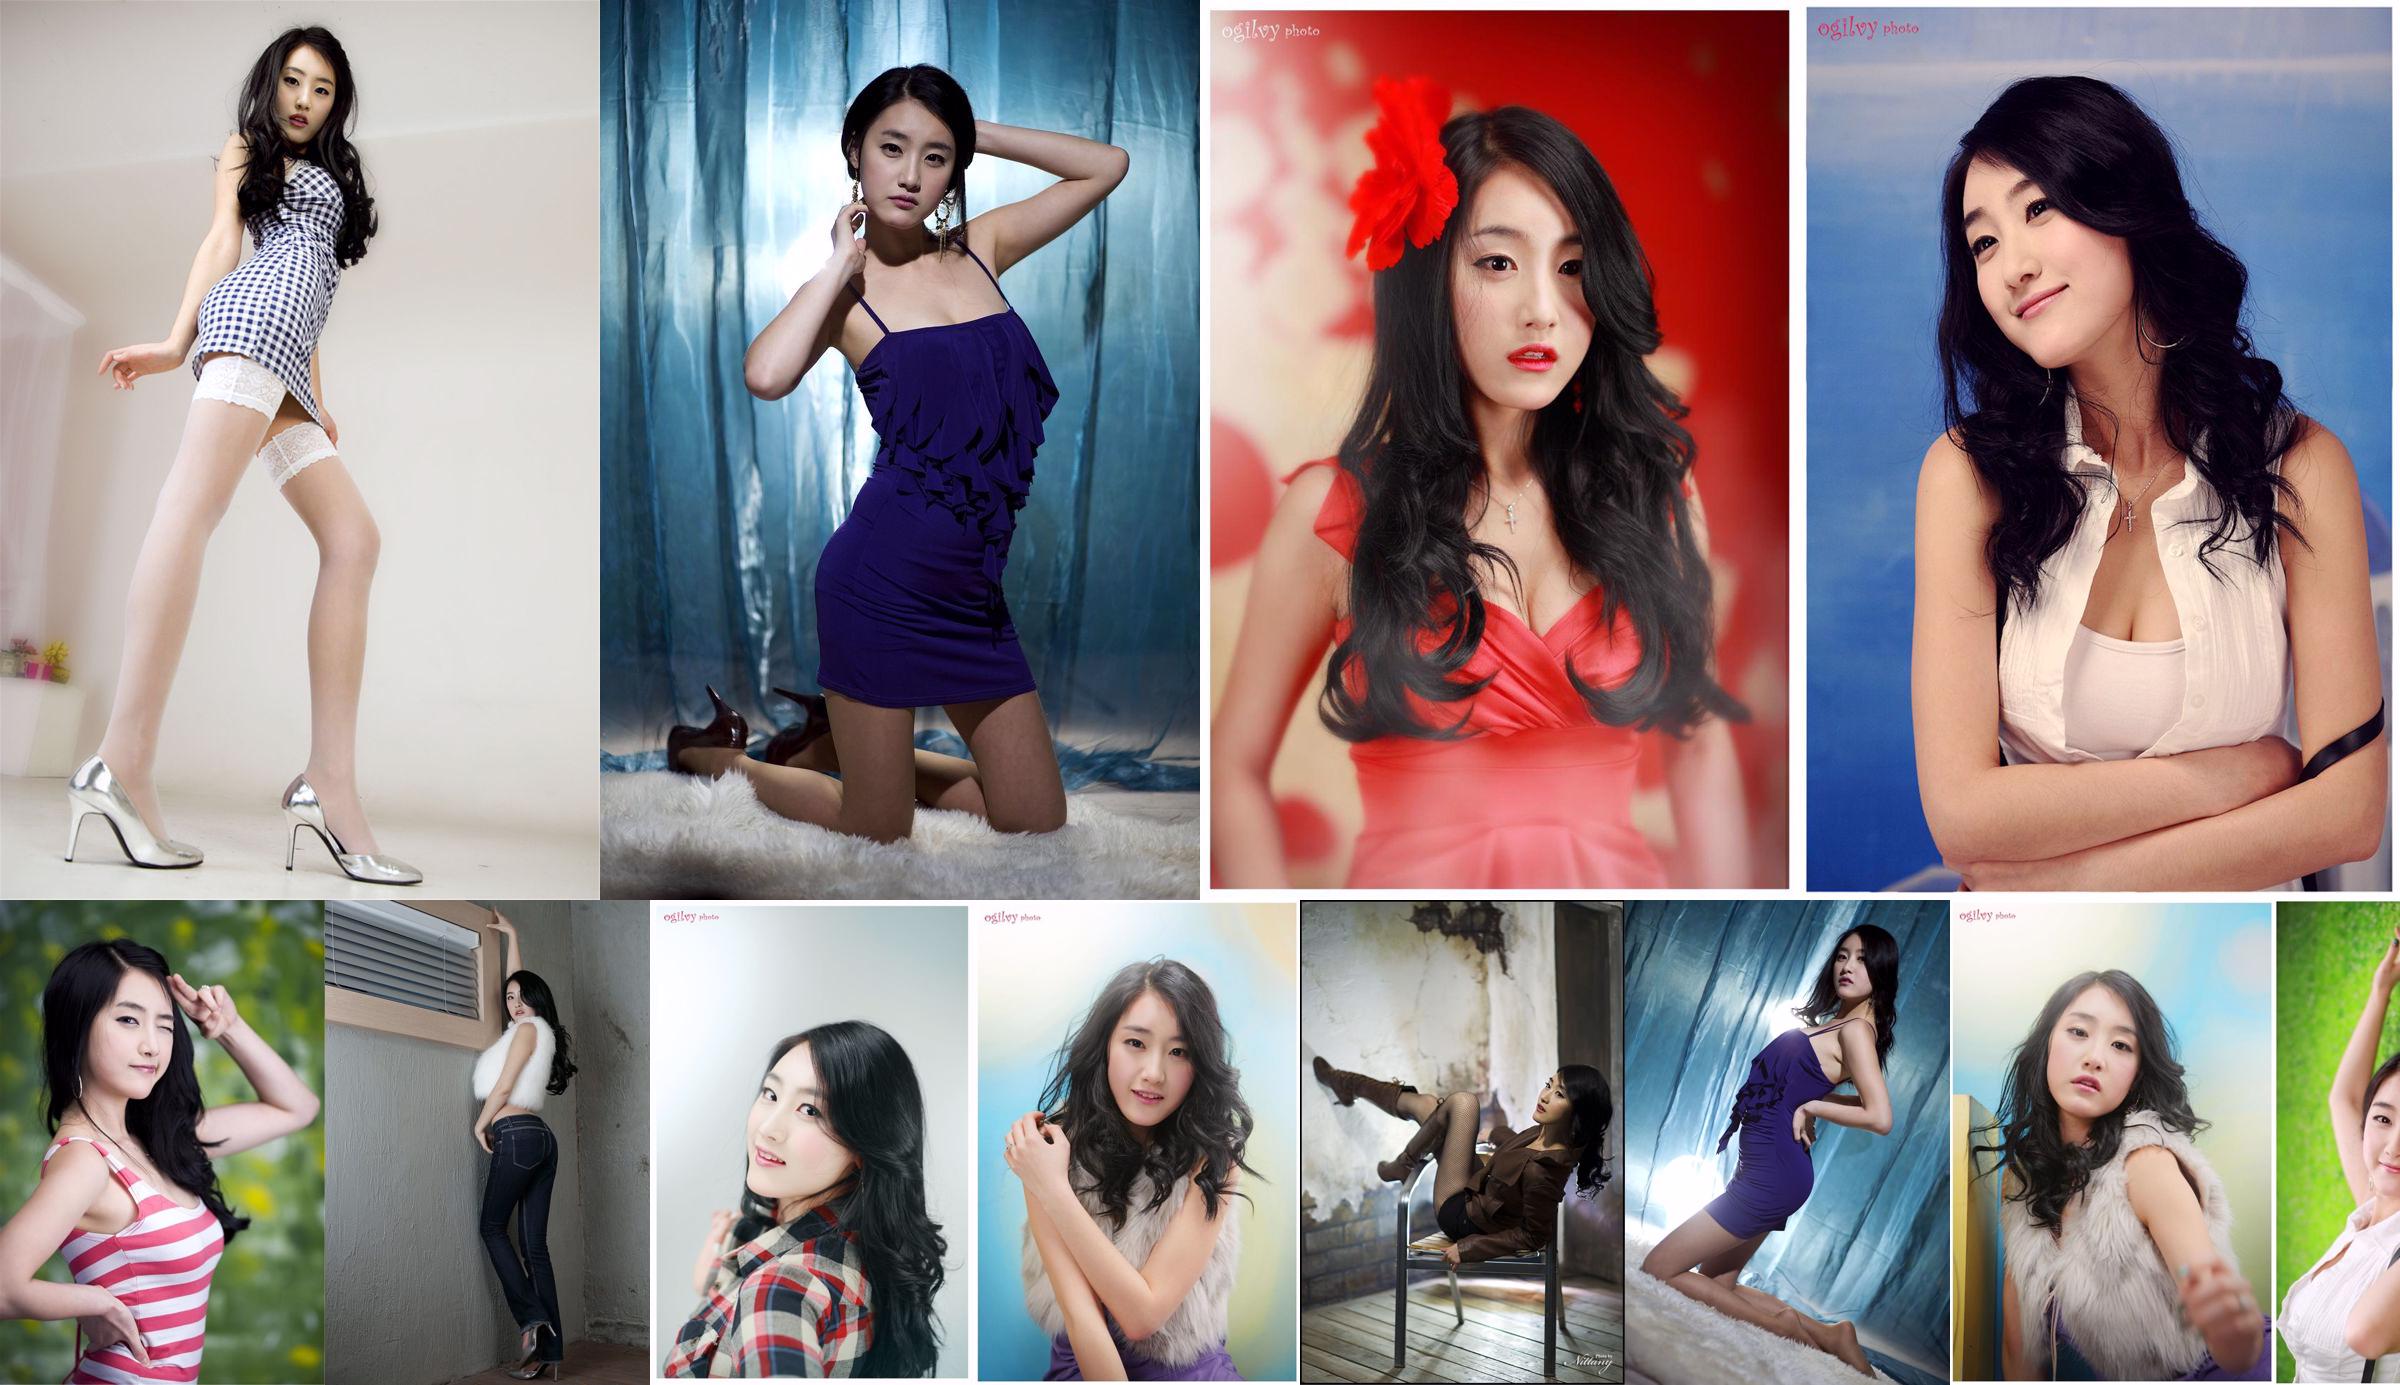 [Koreańska bogini] Choi Zhixiang w "Sexy Studio Shooting" Photo Picture No.7488b2 Strona 1